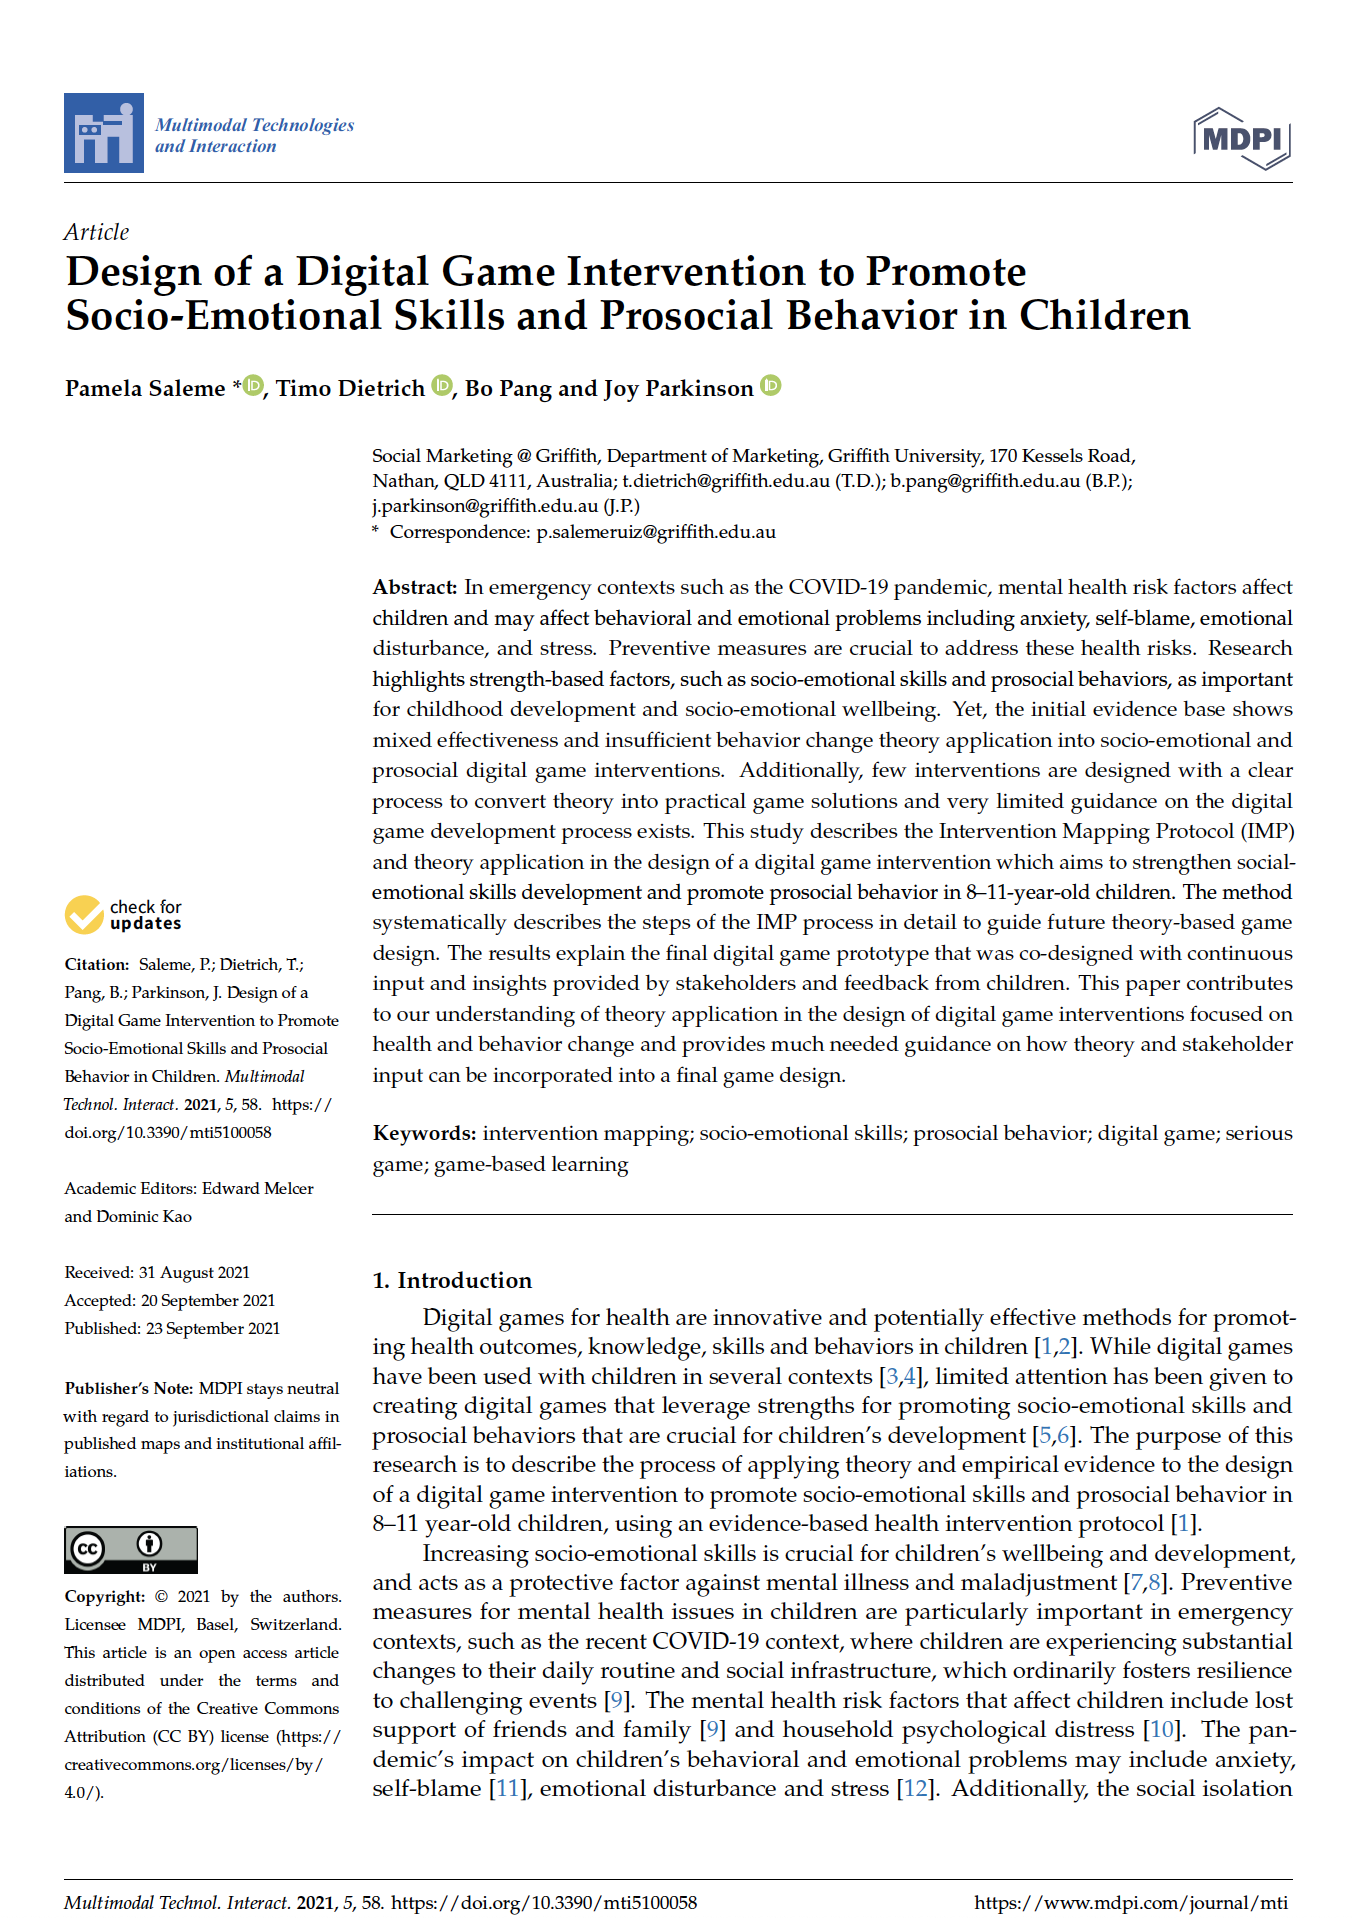 Design of a Digital Game Intervention to Promote Socio-Emotional Skills and Prosocial Behavior in Children Socio-Emotional Skills and Prosocial Behavior in Children